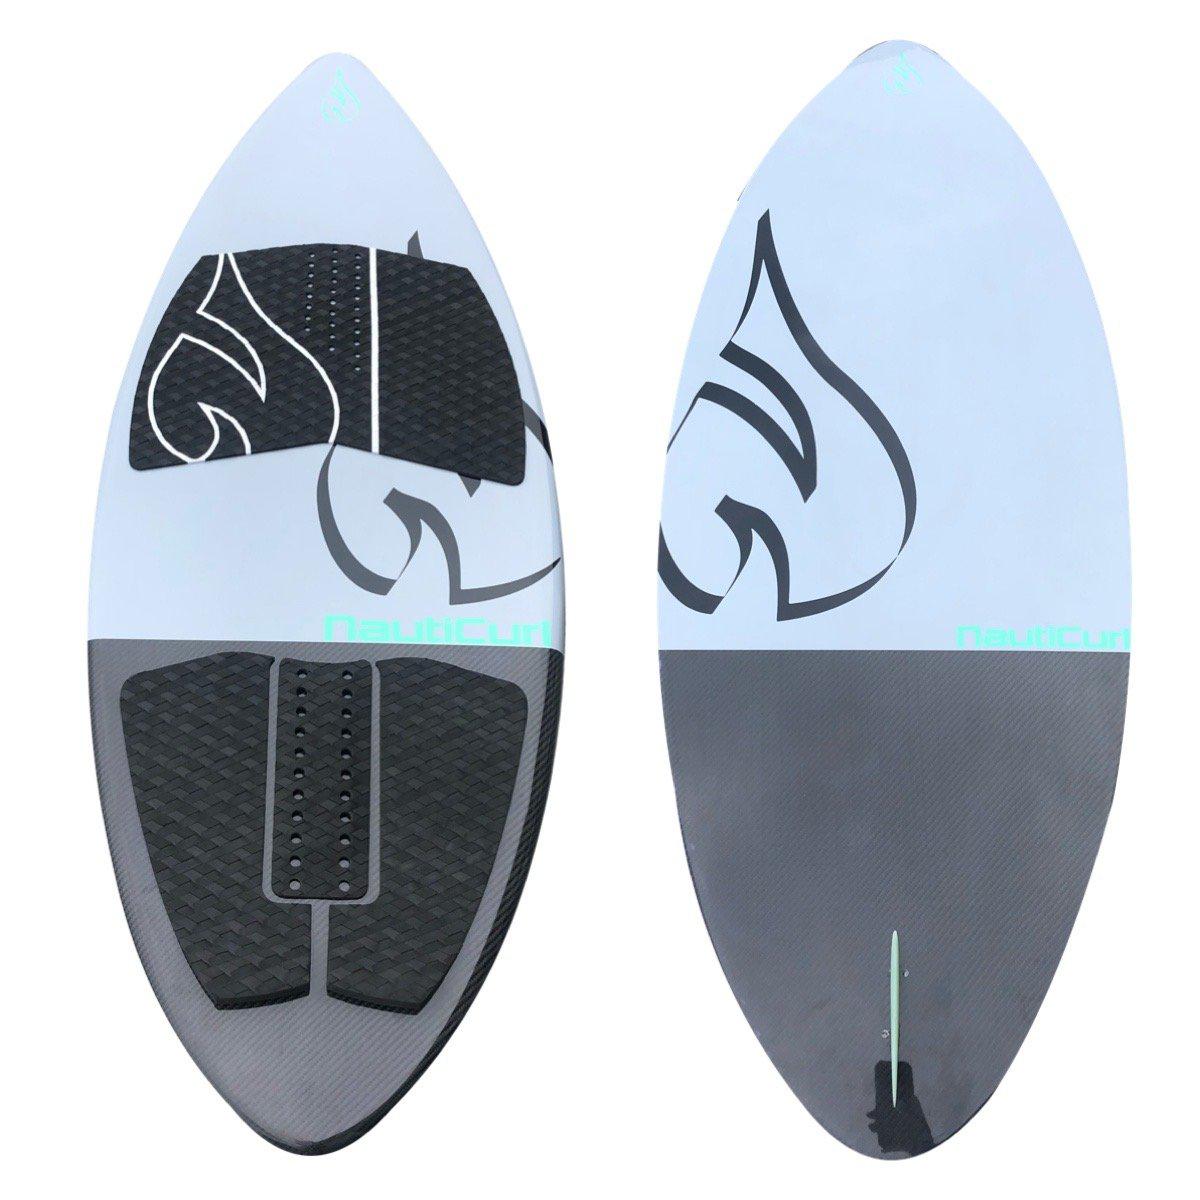 NautiCurl Flightdeck - Carbon Skim Wakesurf Board